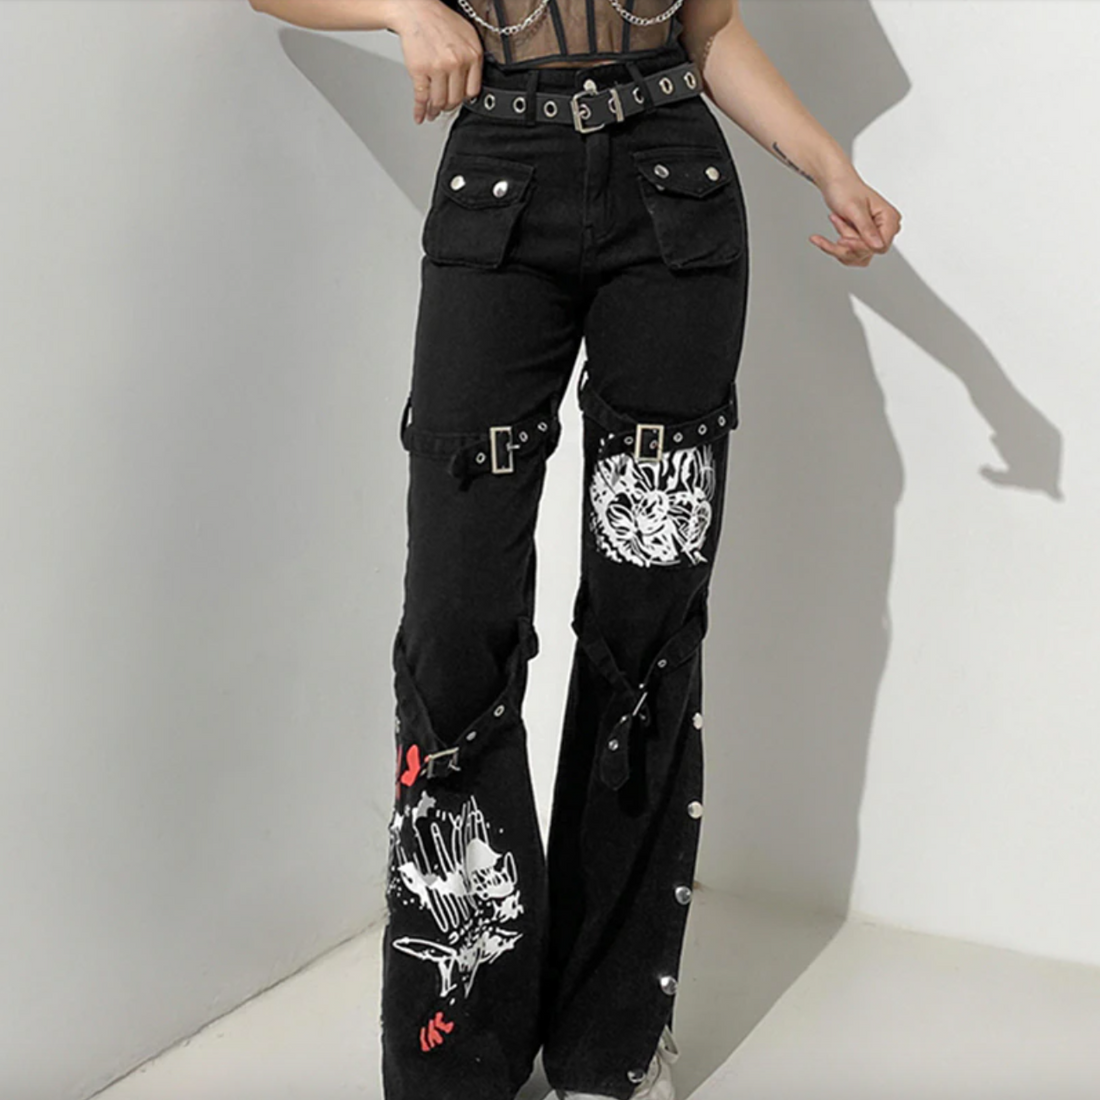 Women's Spring/Autumn Gothic Bandage Baggy Punk Style Hight Waist Pants